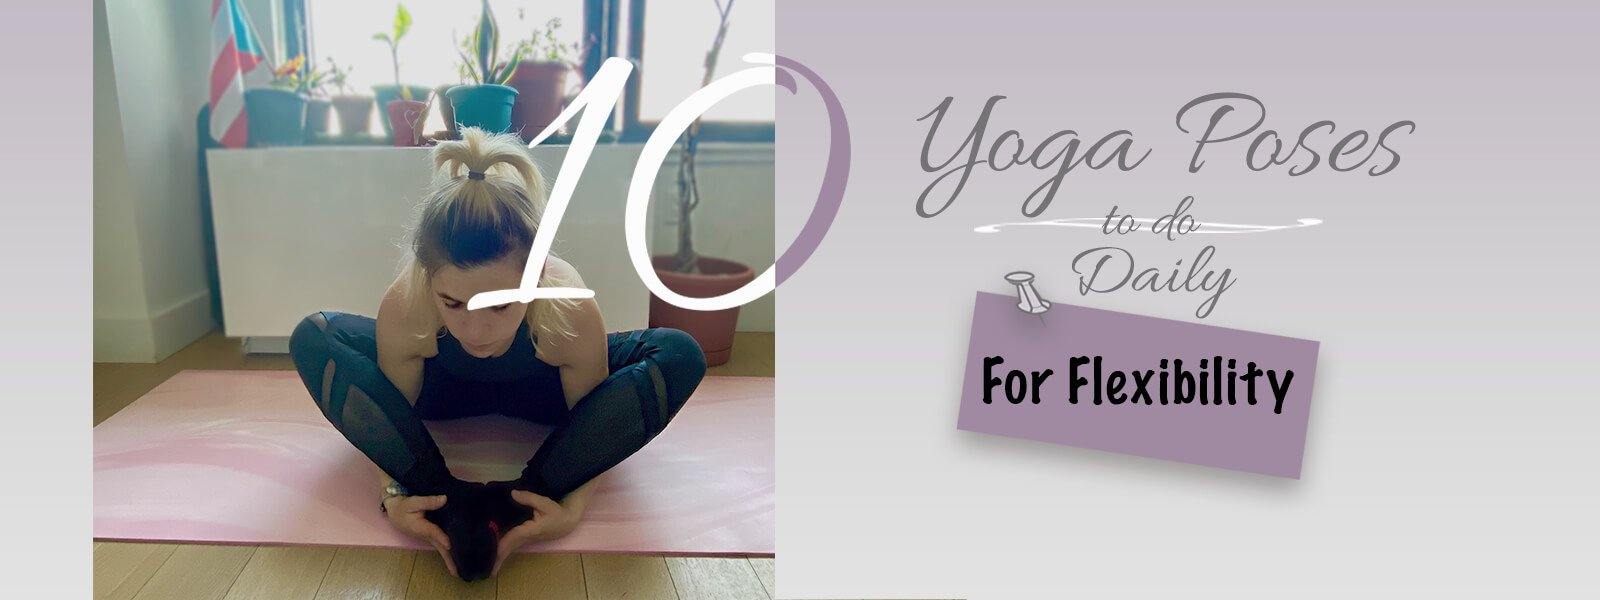 Prana Yoga: The Most Important Aspect - Yoga Poses 4 You